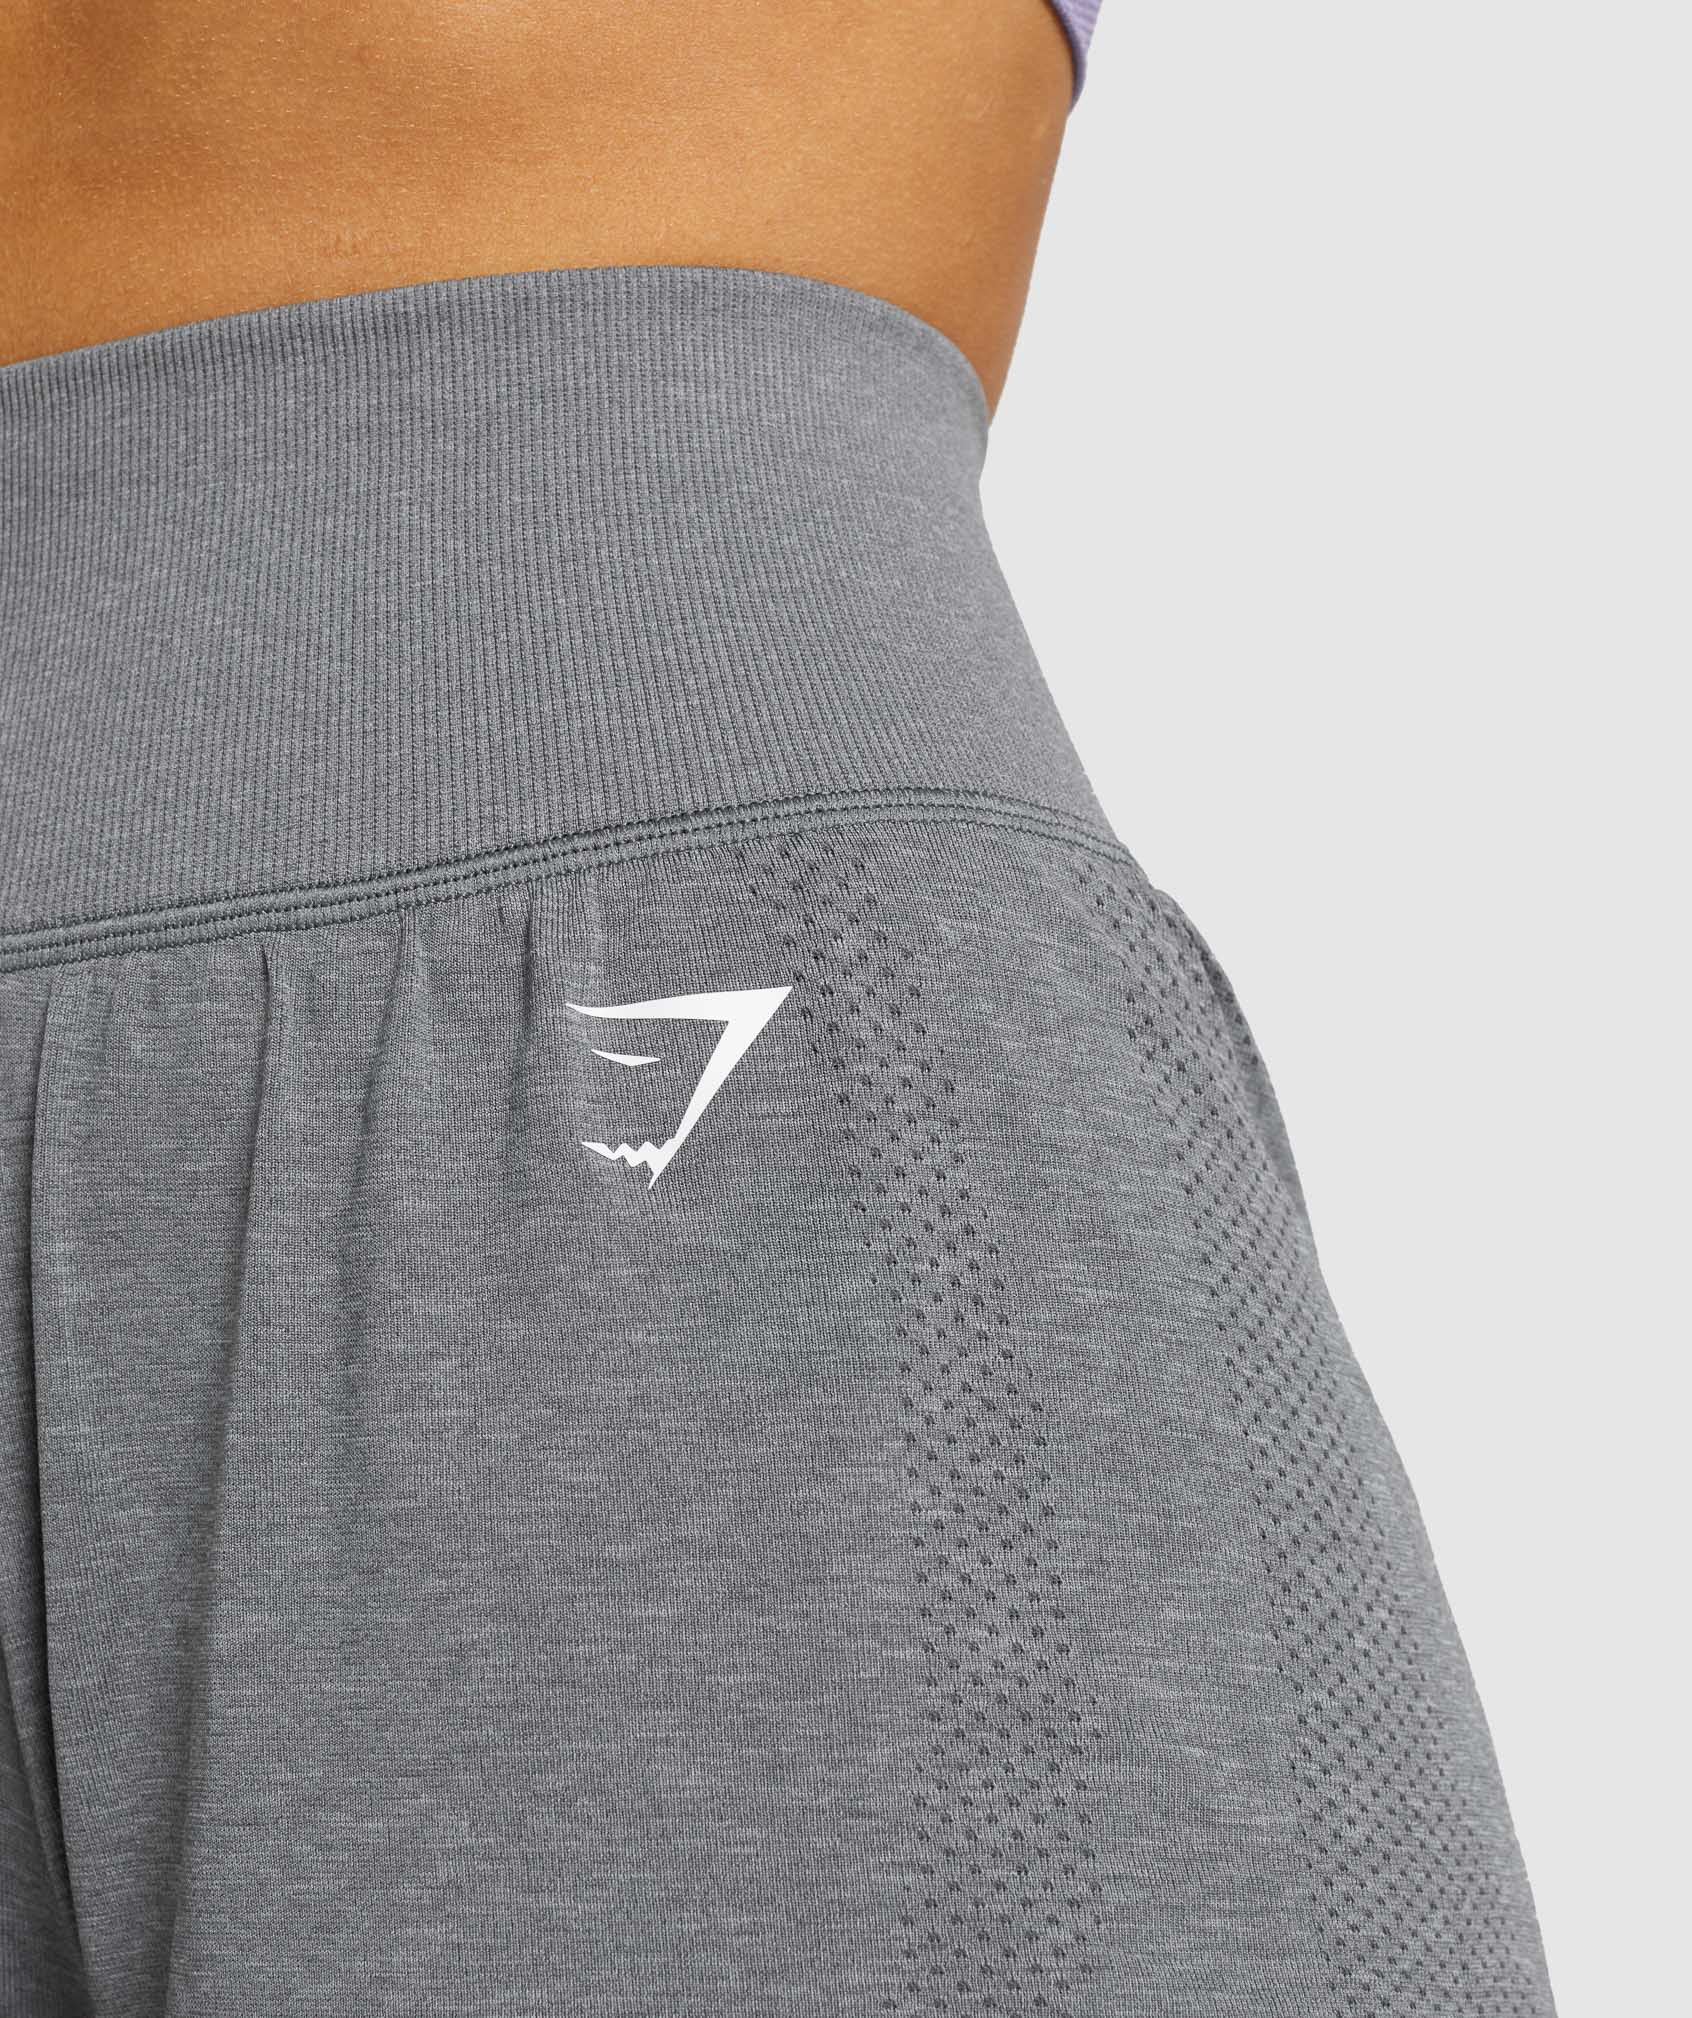 Vital Seamless 2.0 2-in-1 Shorts in Smokey Grey Marl